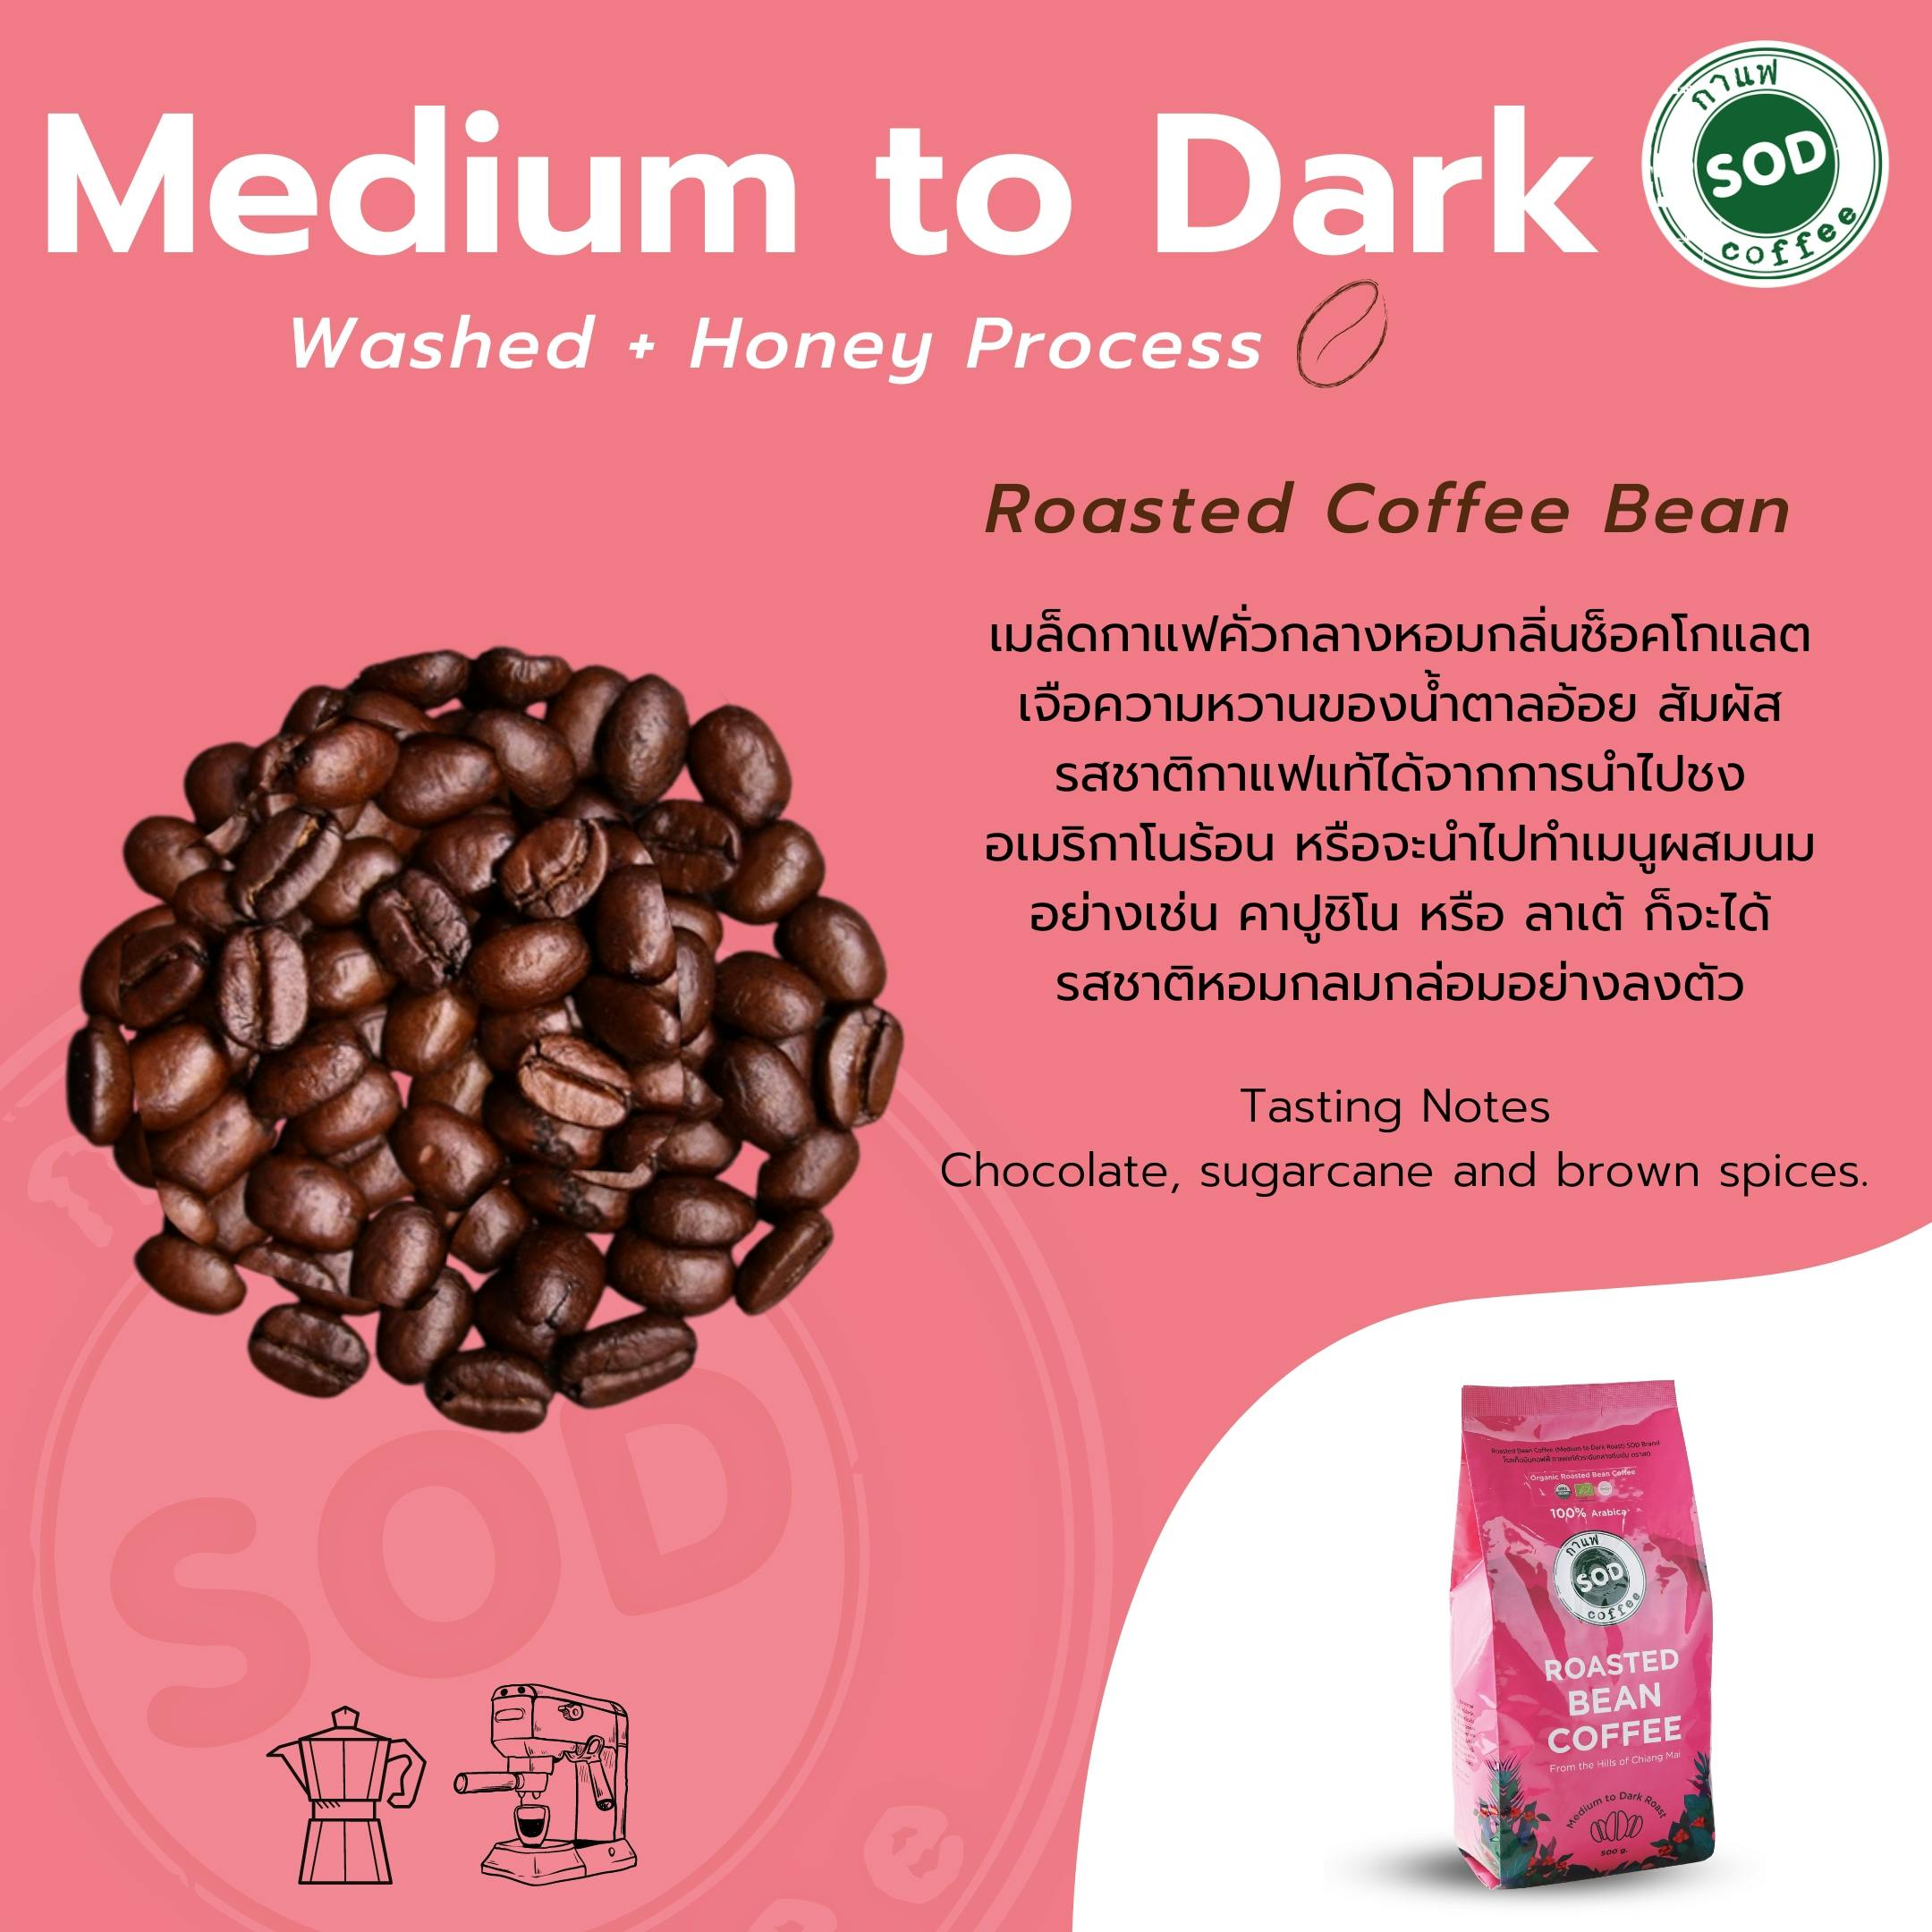 SOD Coffee: เมล็ดกาแฟออร์แกนิก Organic Roasted Bean Coffee (Medium to Dark Roast) ขนาด 500 กรัม 